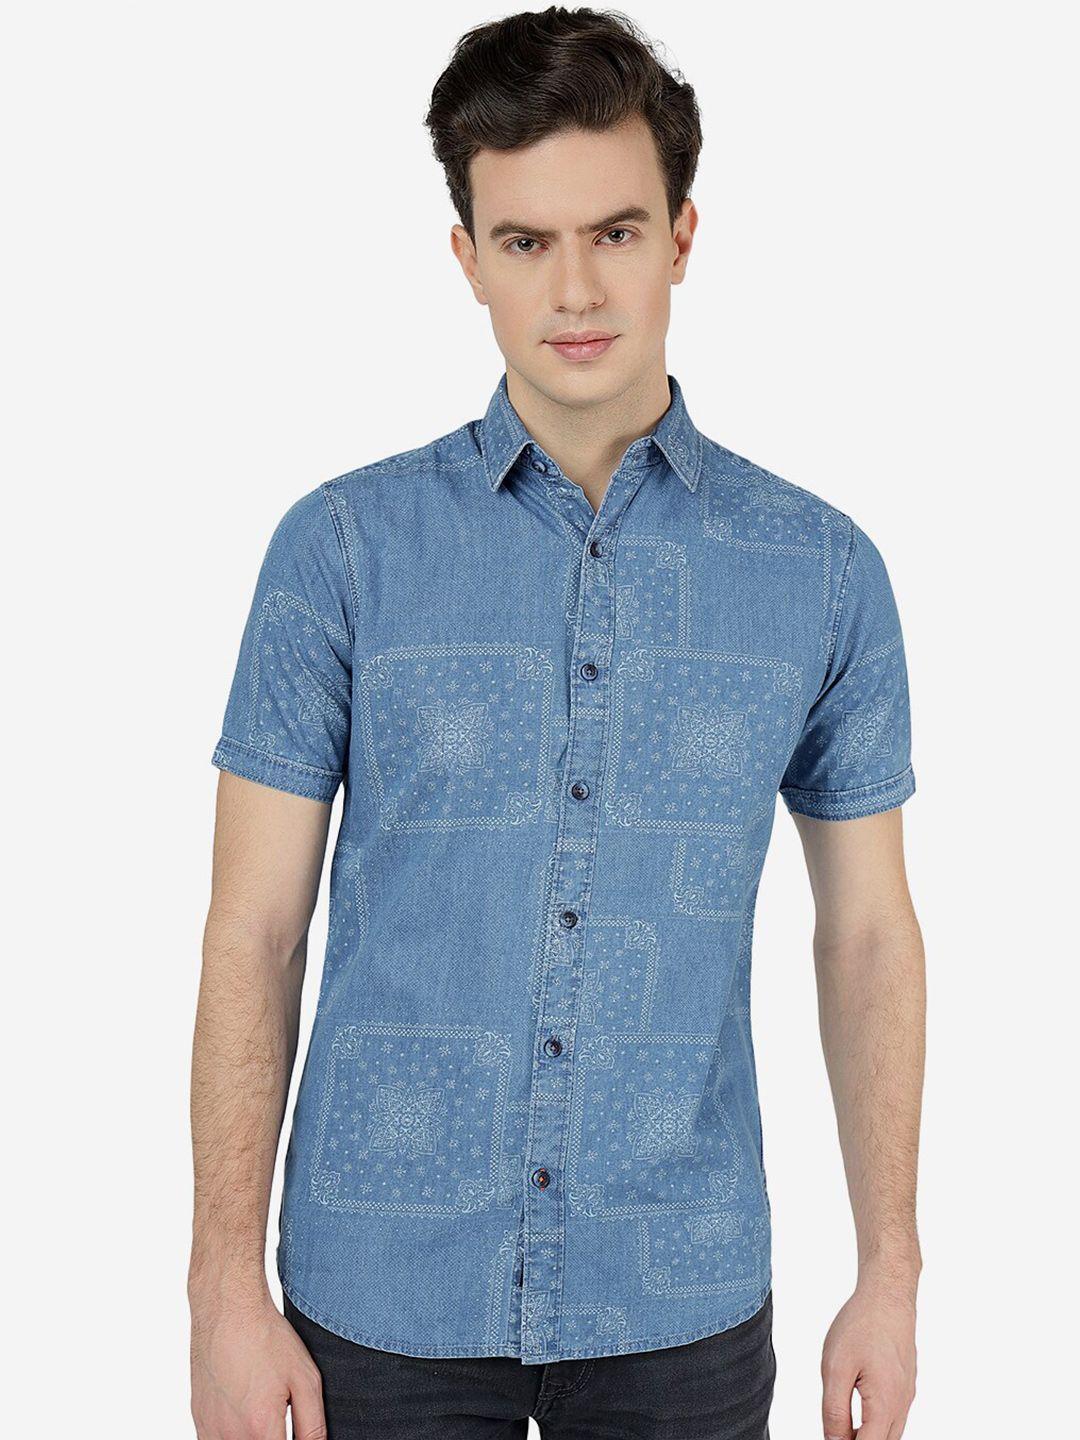 jade blue slim fit geometric printed pure cotton casual shirt